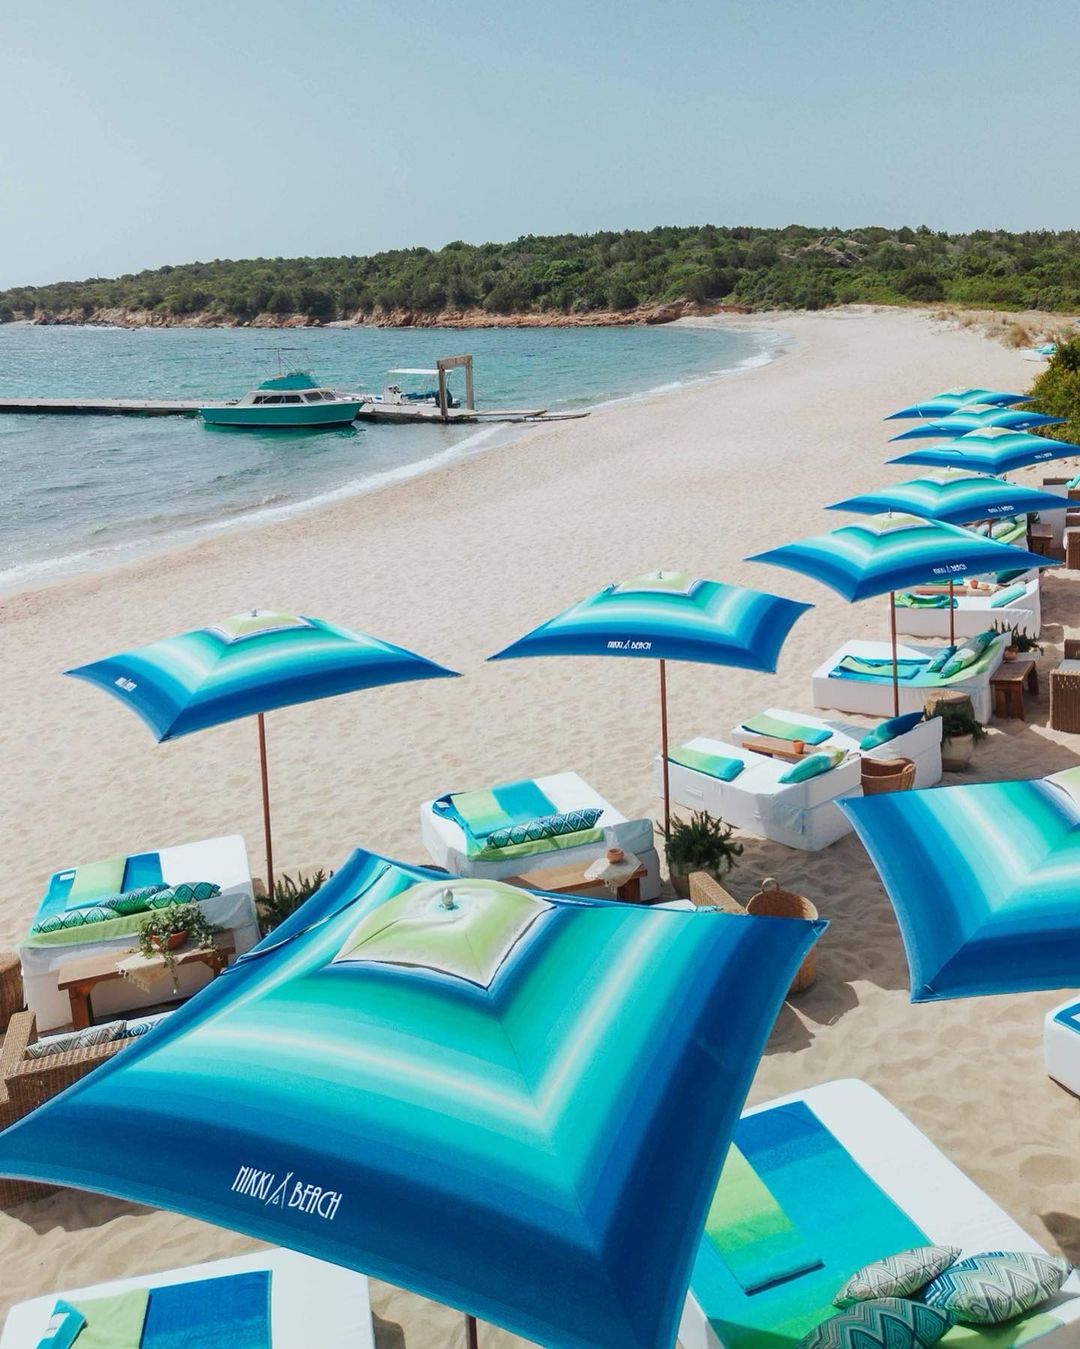 Amazing setting of blue umbrellas on Nikki Beach Costa Smeralda - Sardinia - Top 10 Beach Bars